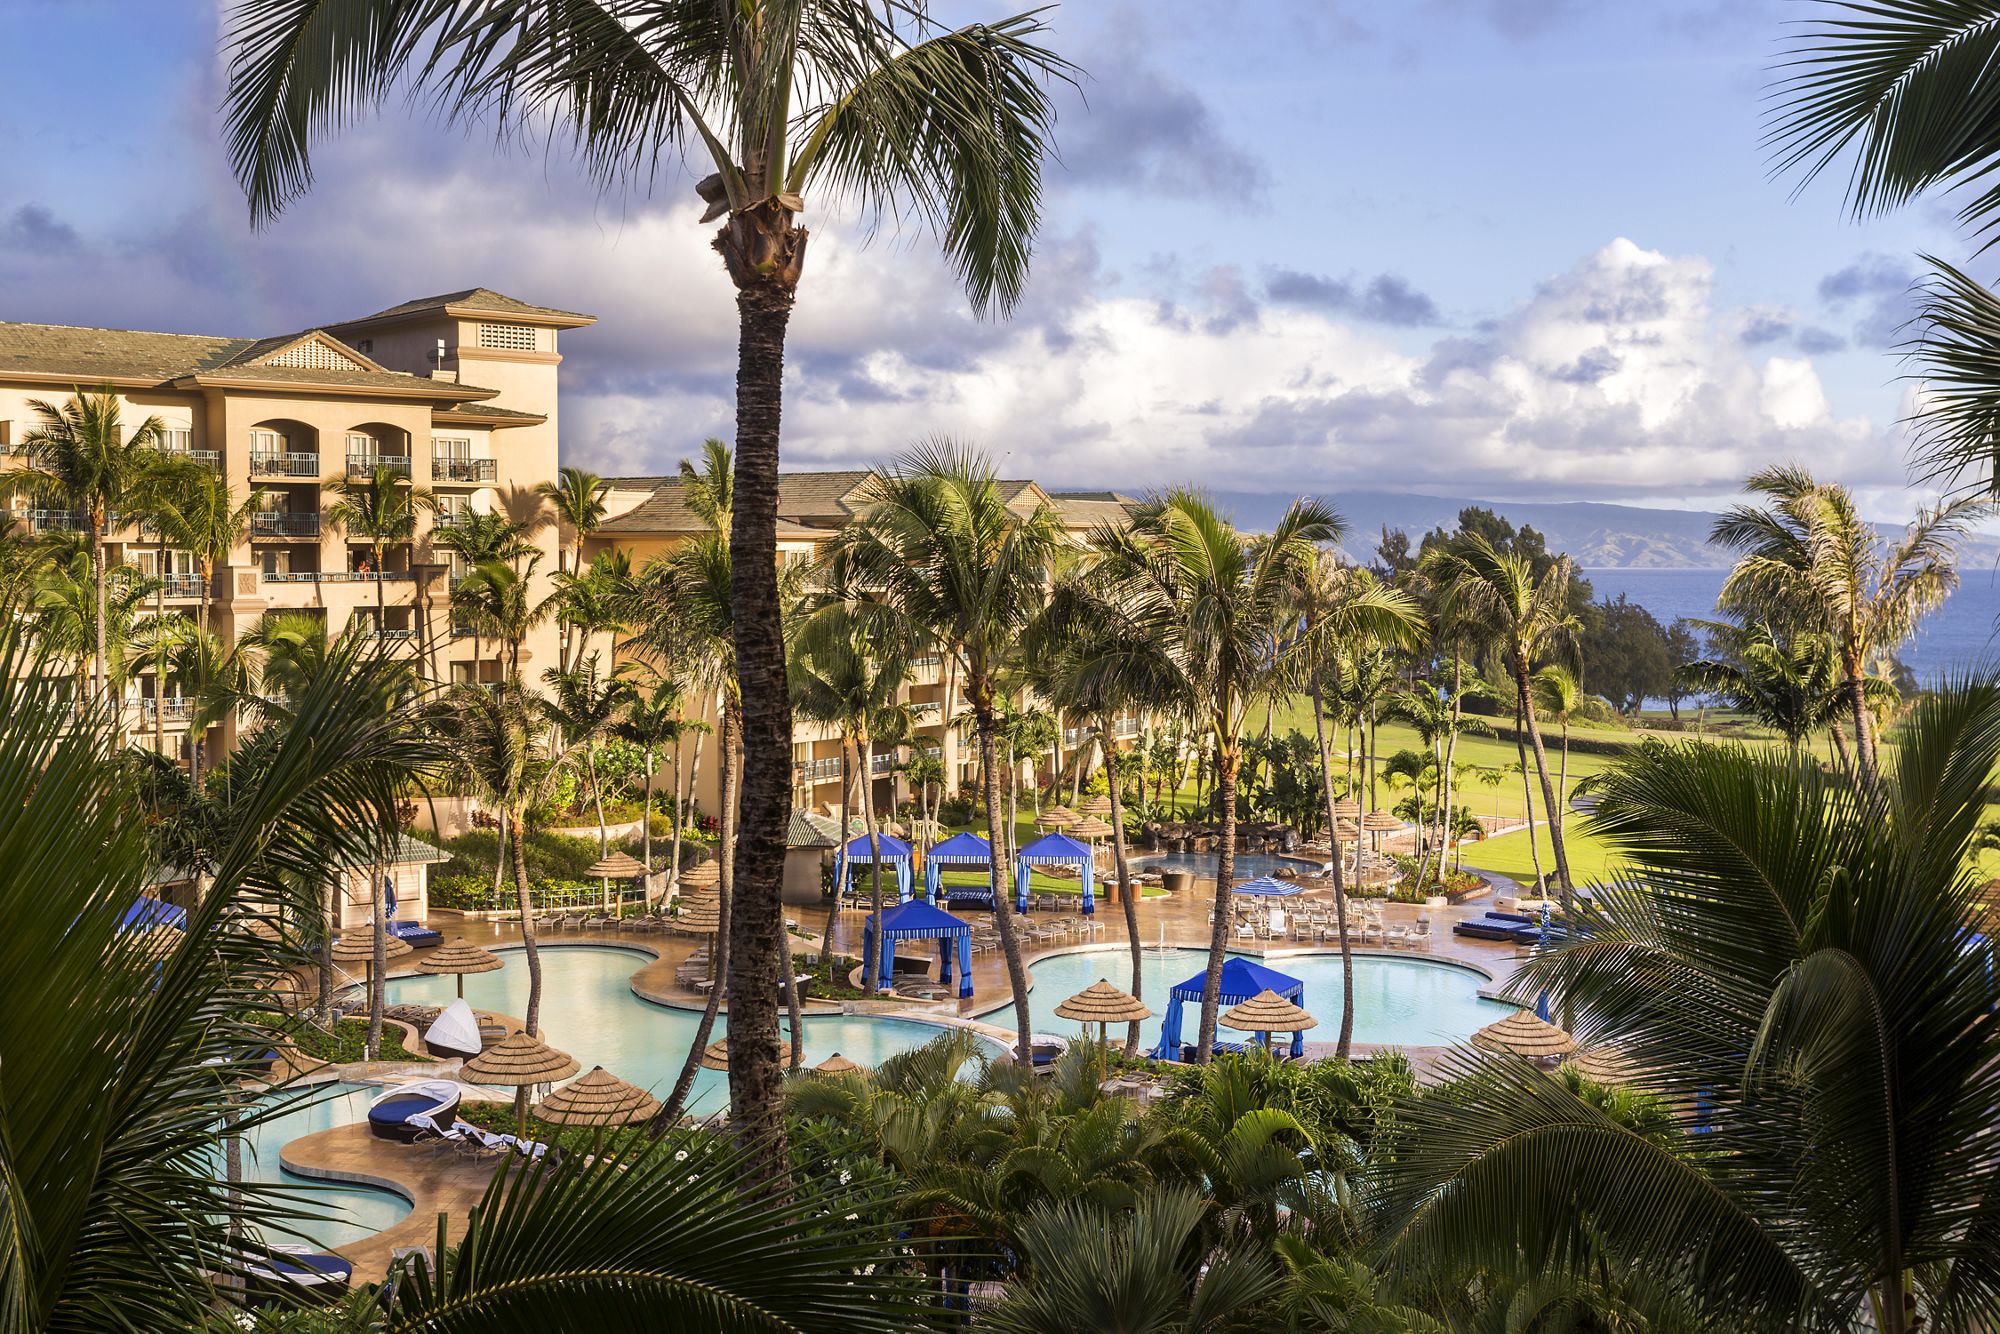 LuxeGetaways - Luxury Travel - Luxury Travel Magazine - Luxe Getaways - Luxury Lifestyle - The Ritz Carlton Kapalua - Maui - Hawaii - Luxury Hotel Maui - pools